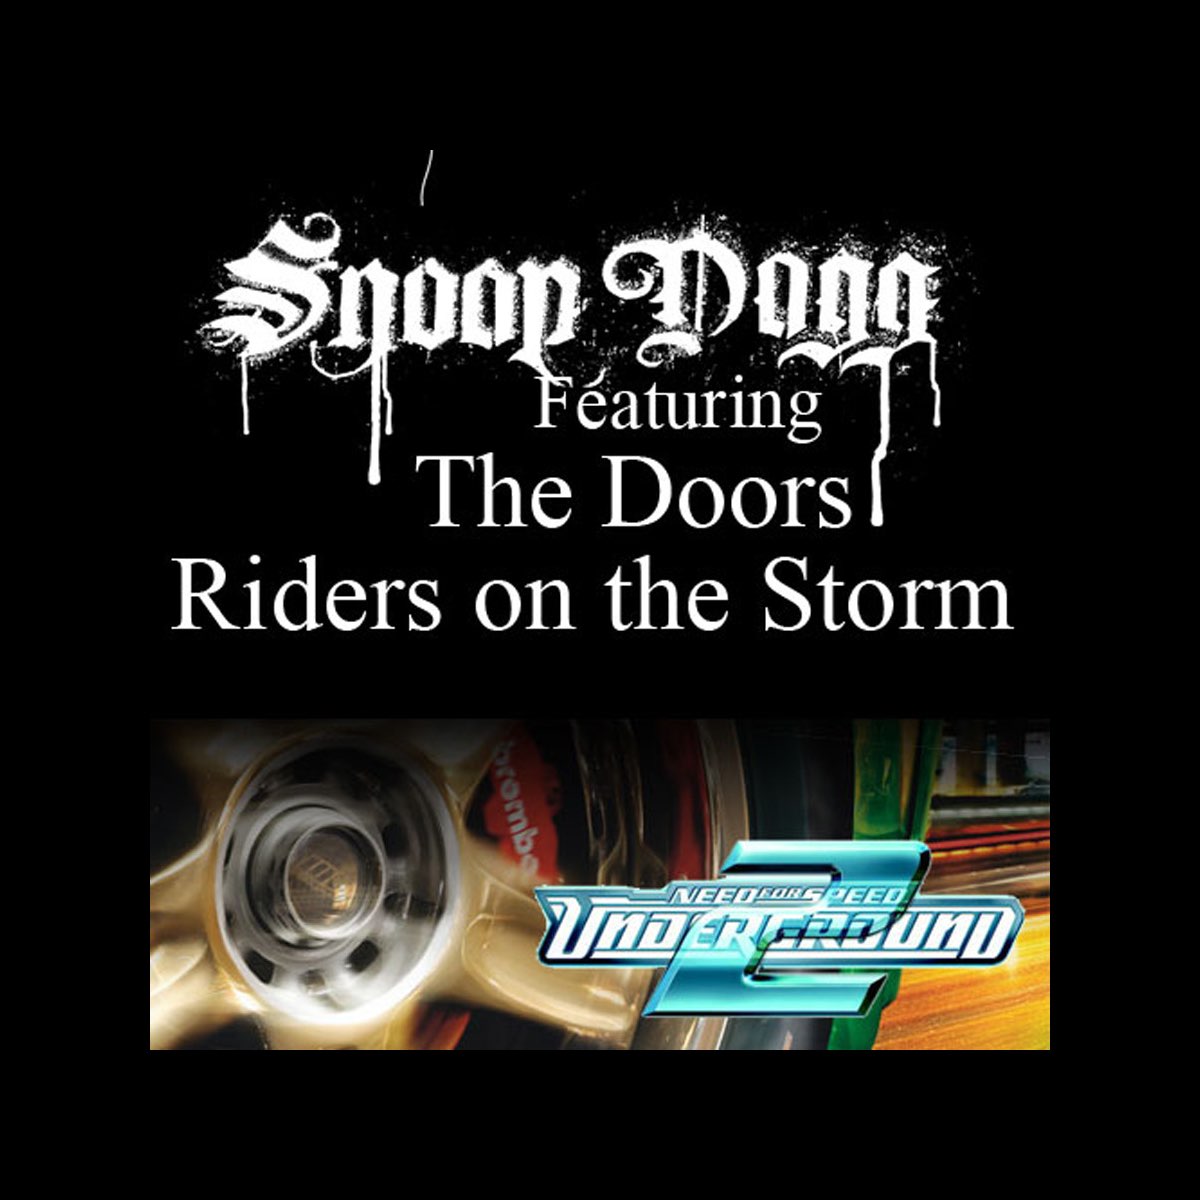 Riders On the Storm (Fredwreck Remix) - Single [feat. The Doors] - Single  par Snoop Dogg sur Apple Music